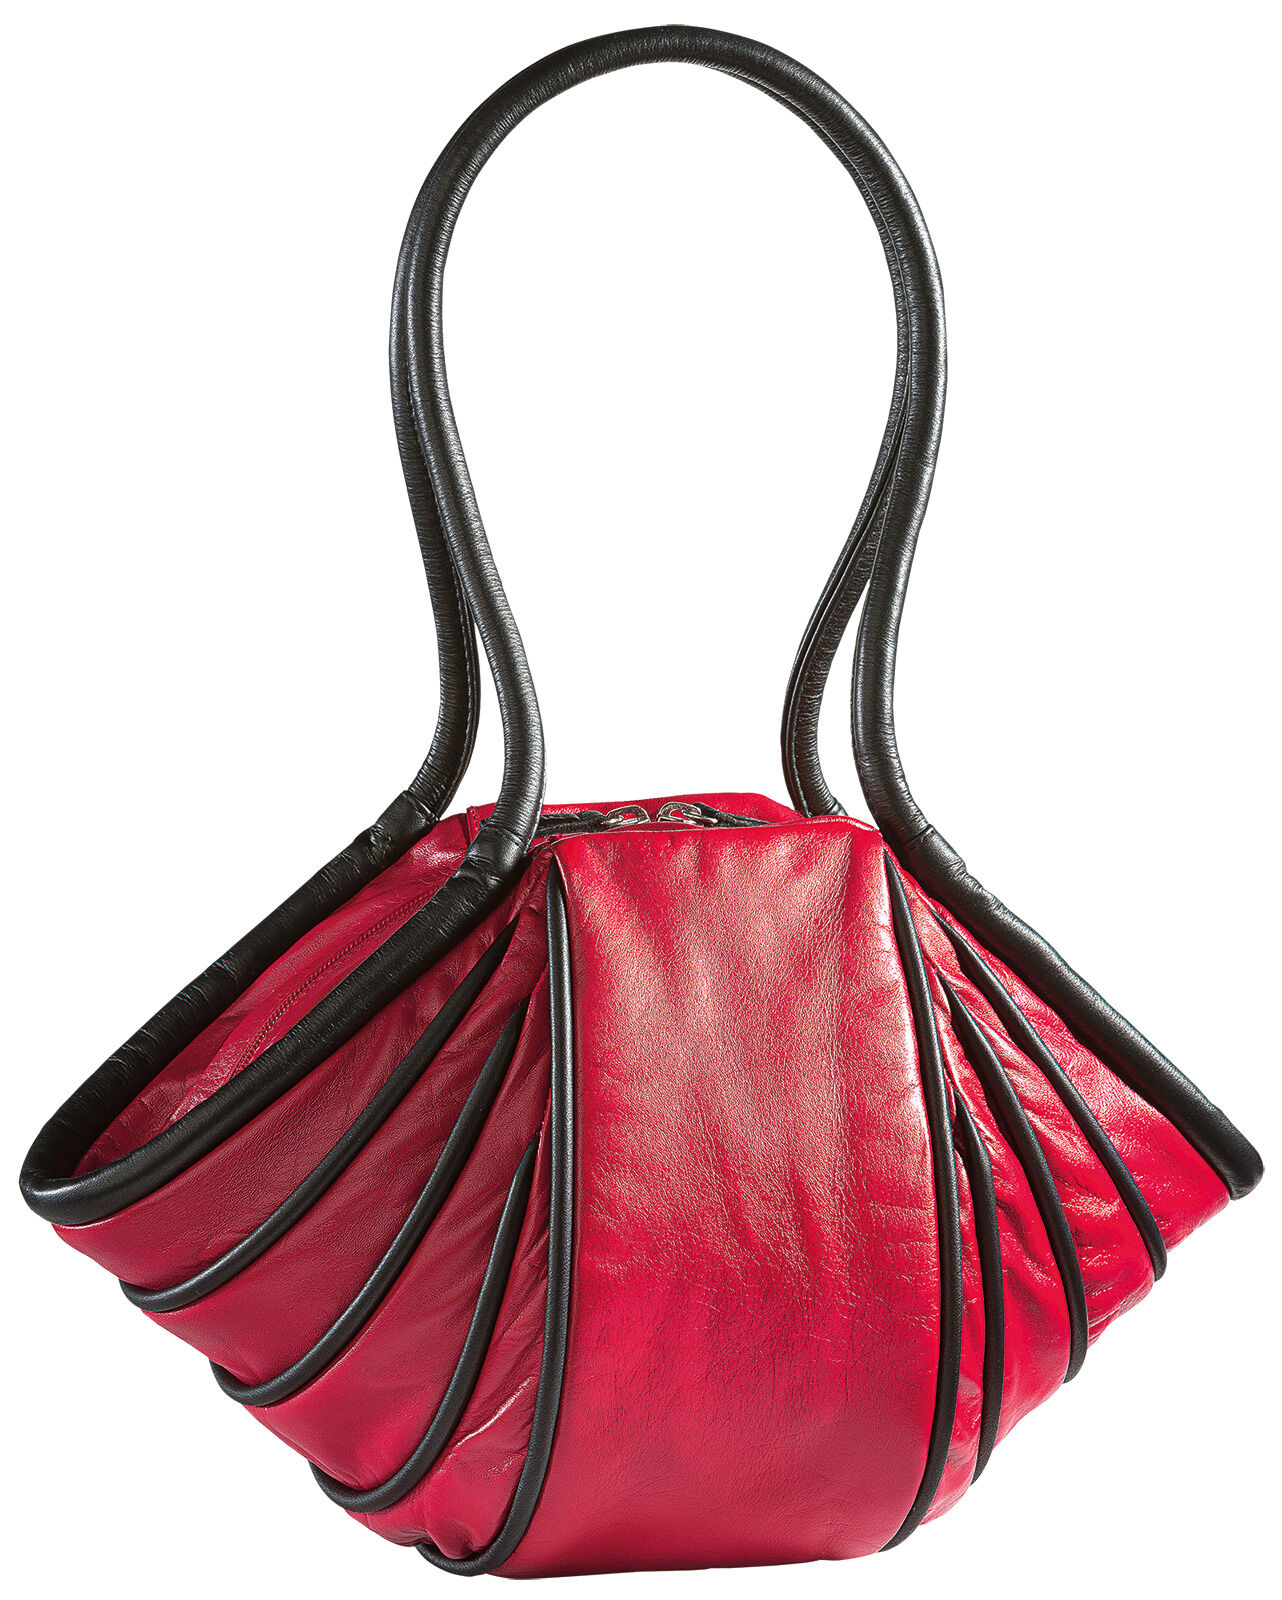 Handbag "Lady-Stripe", red/black version